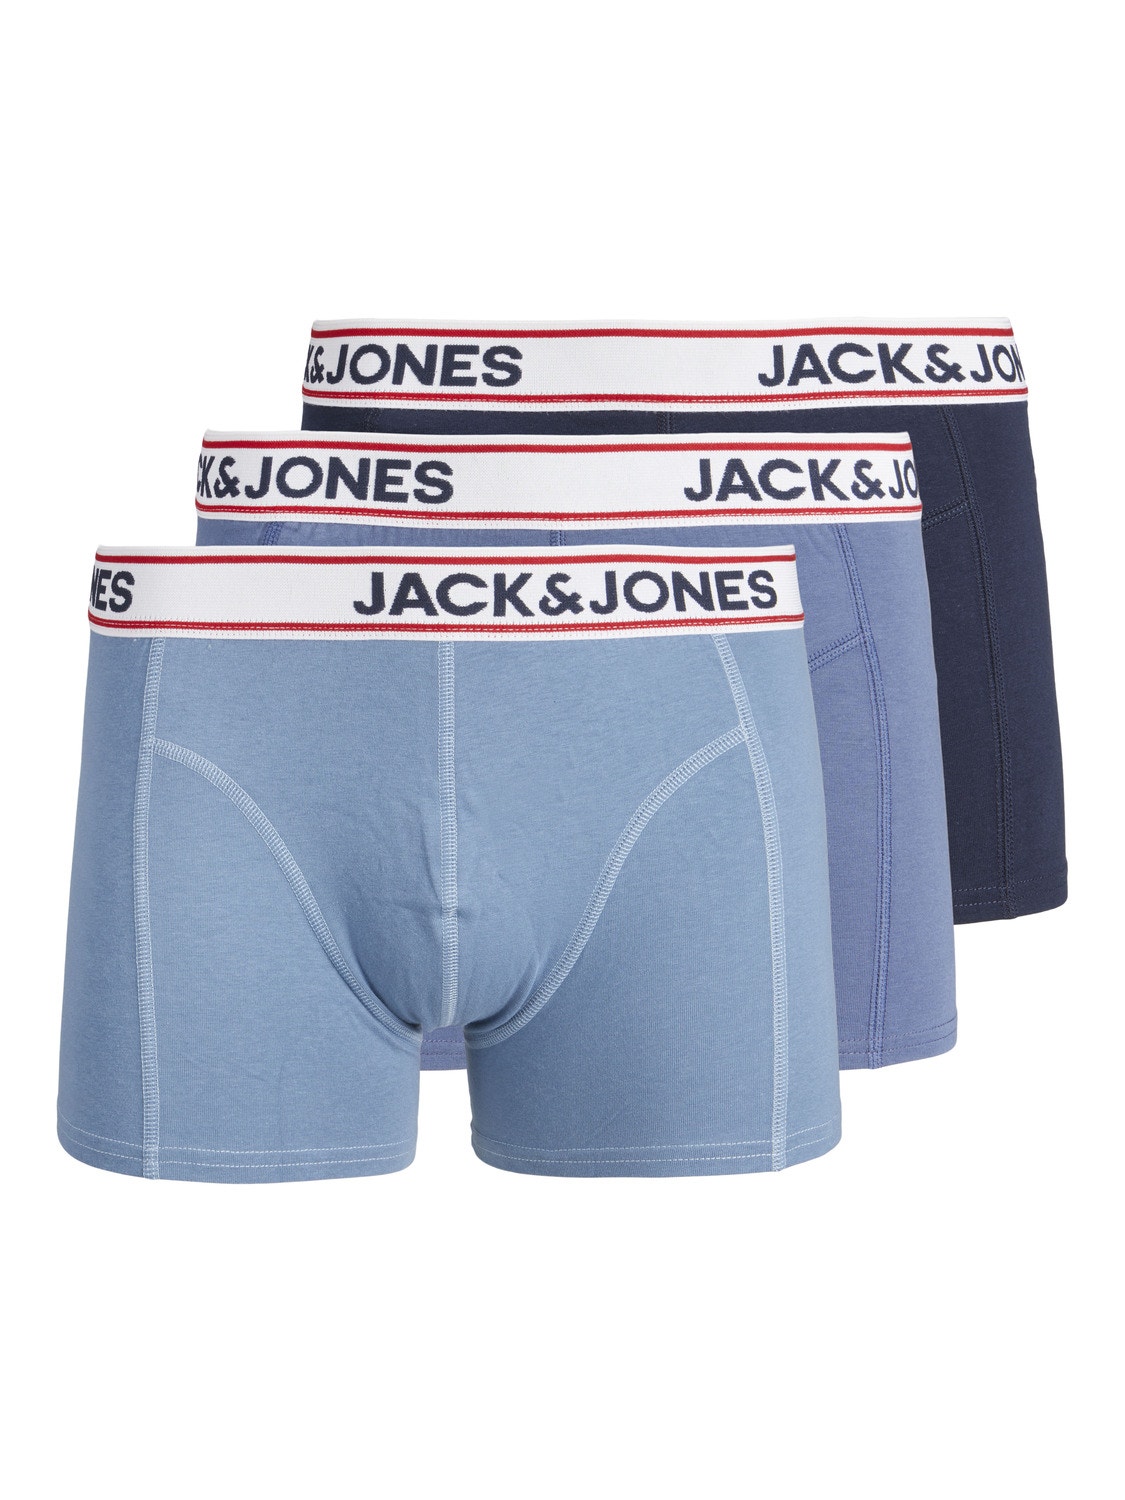 Jack & Jones Confezione da 3 Boxer -Navy Blazer - 12236291